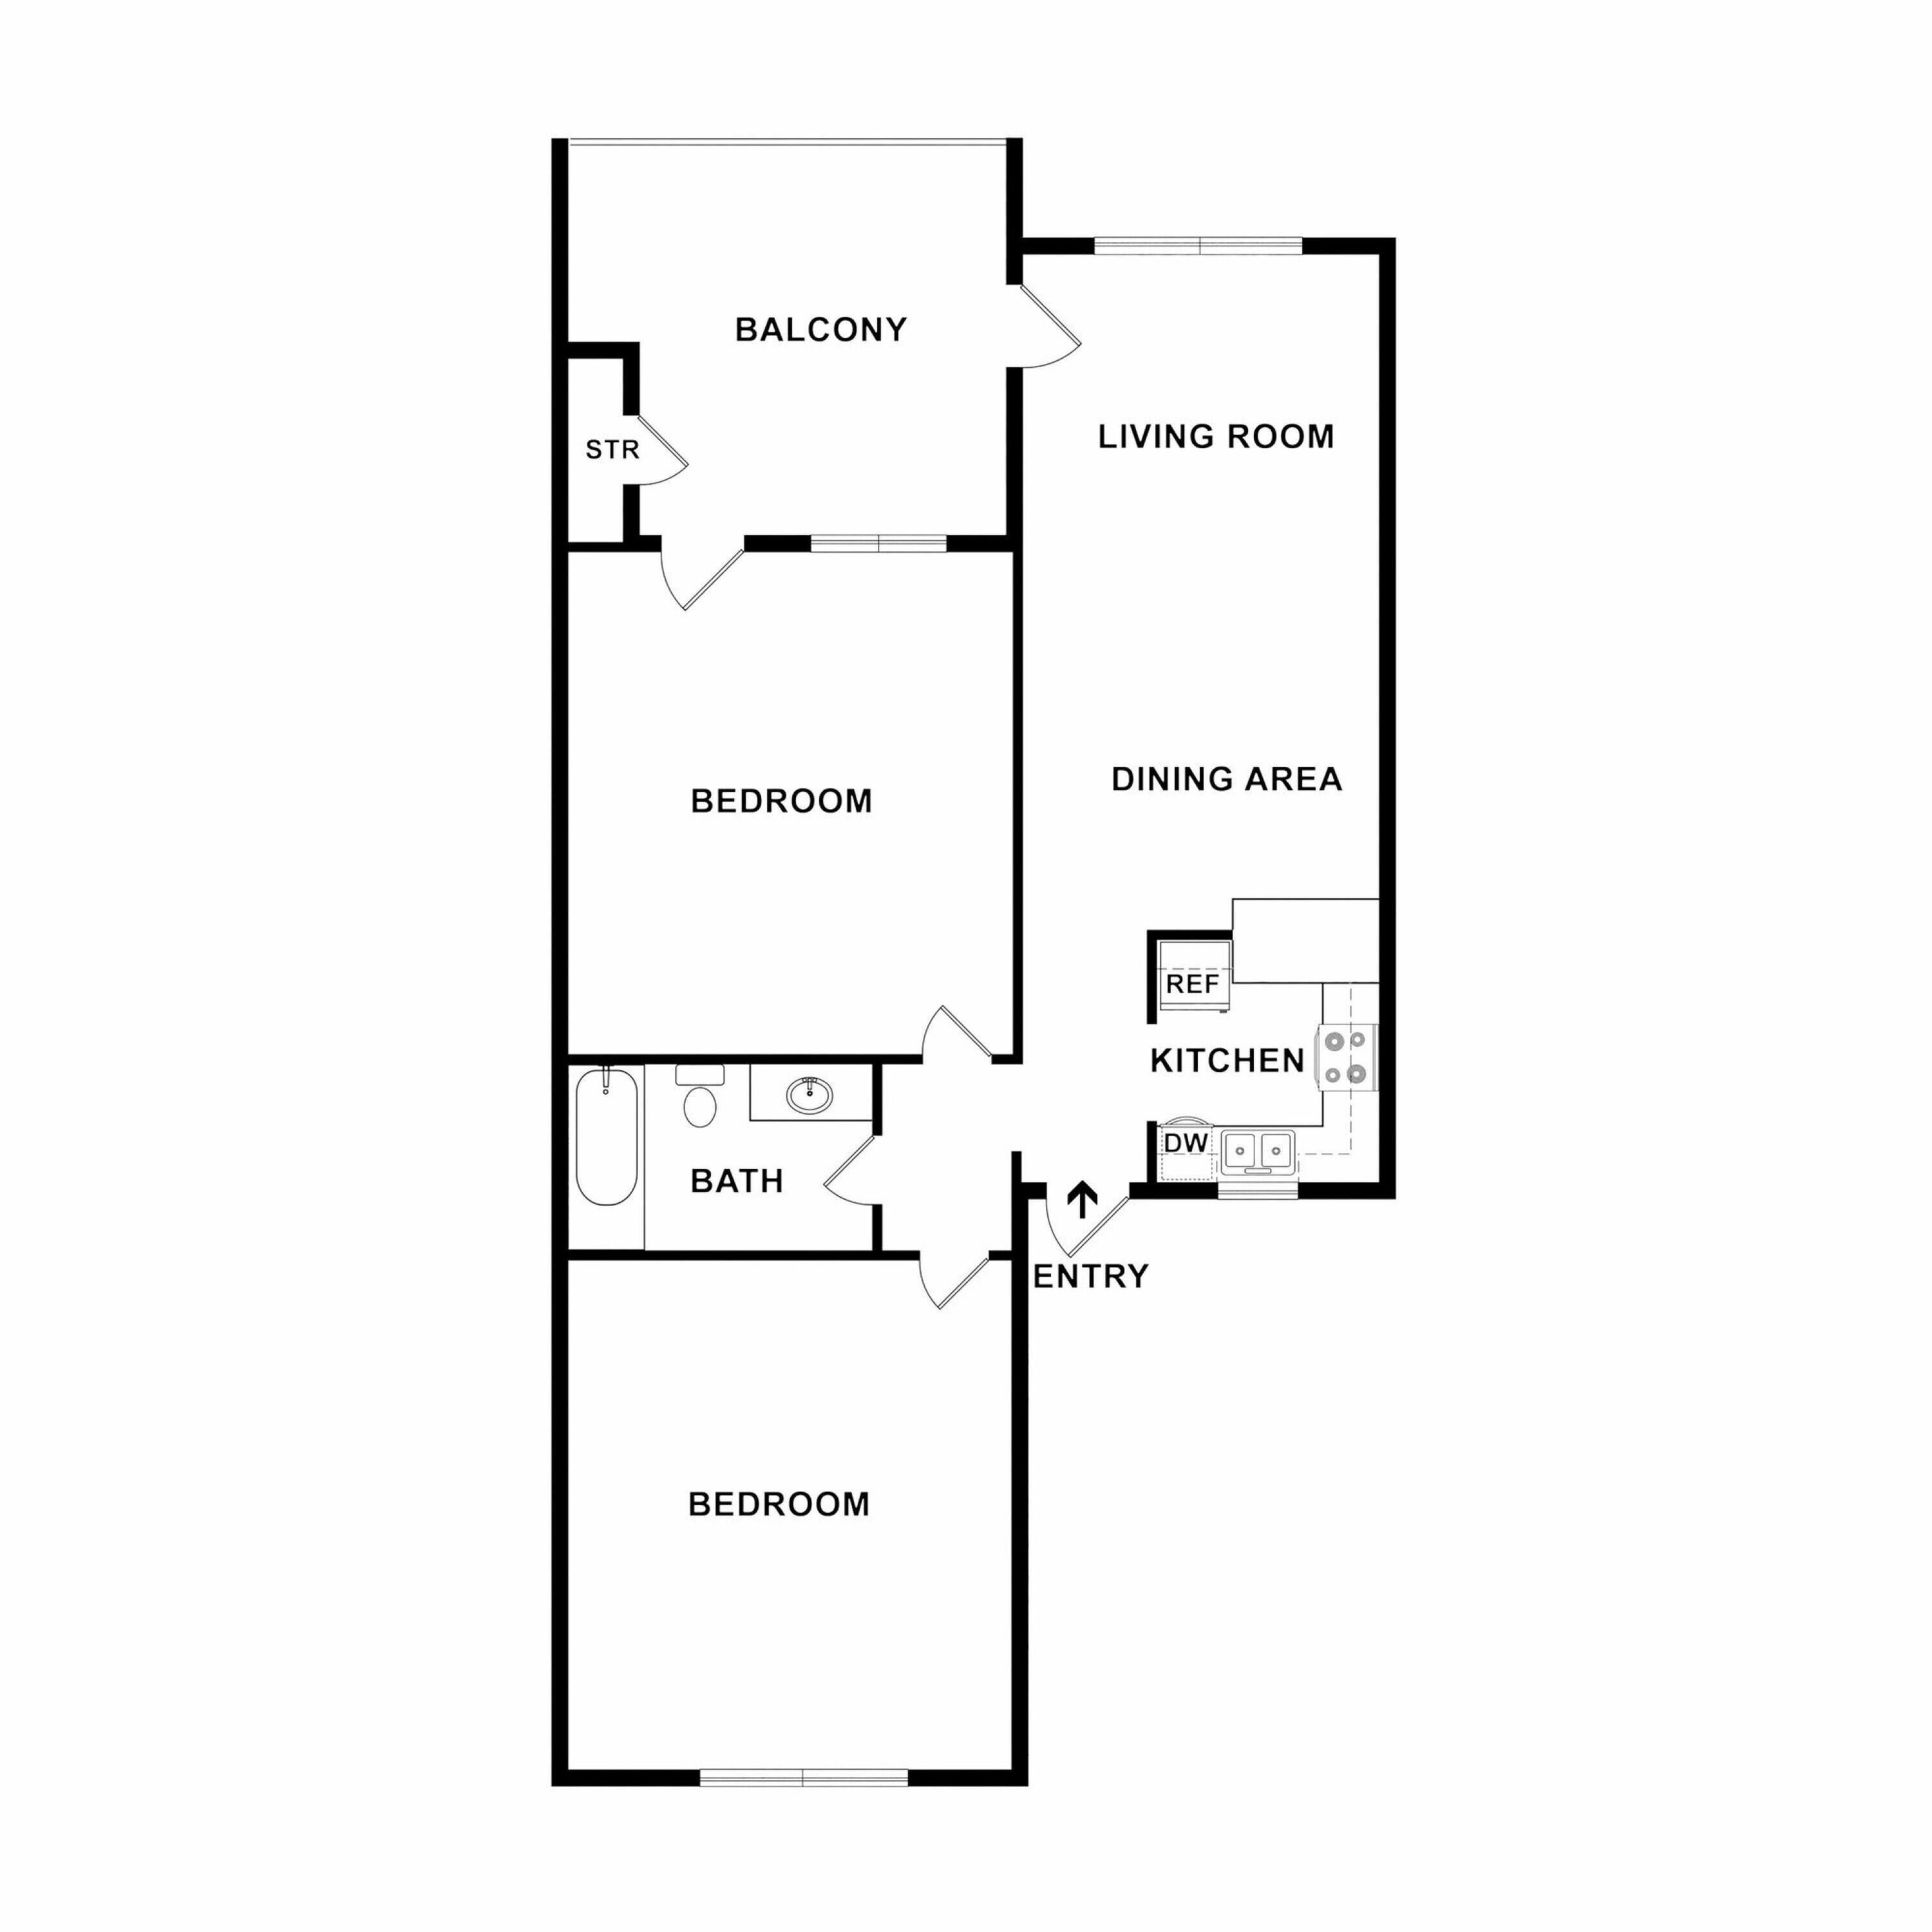 Two-Bedroom, One-Bathroom - 2D Plan